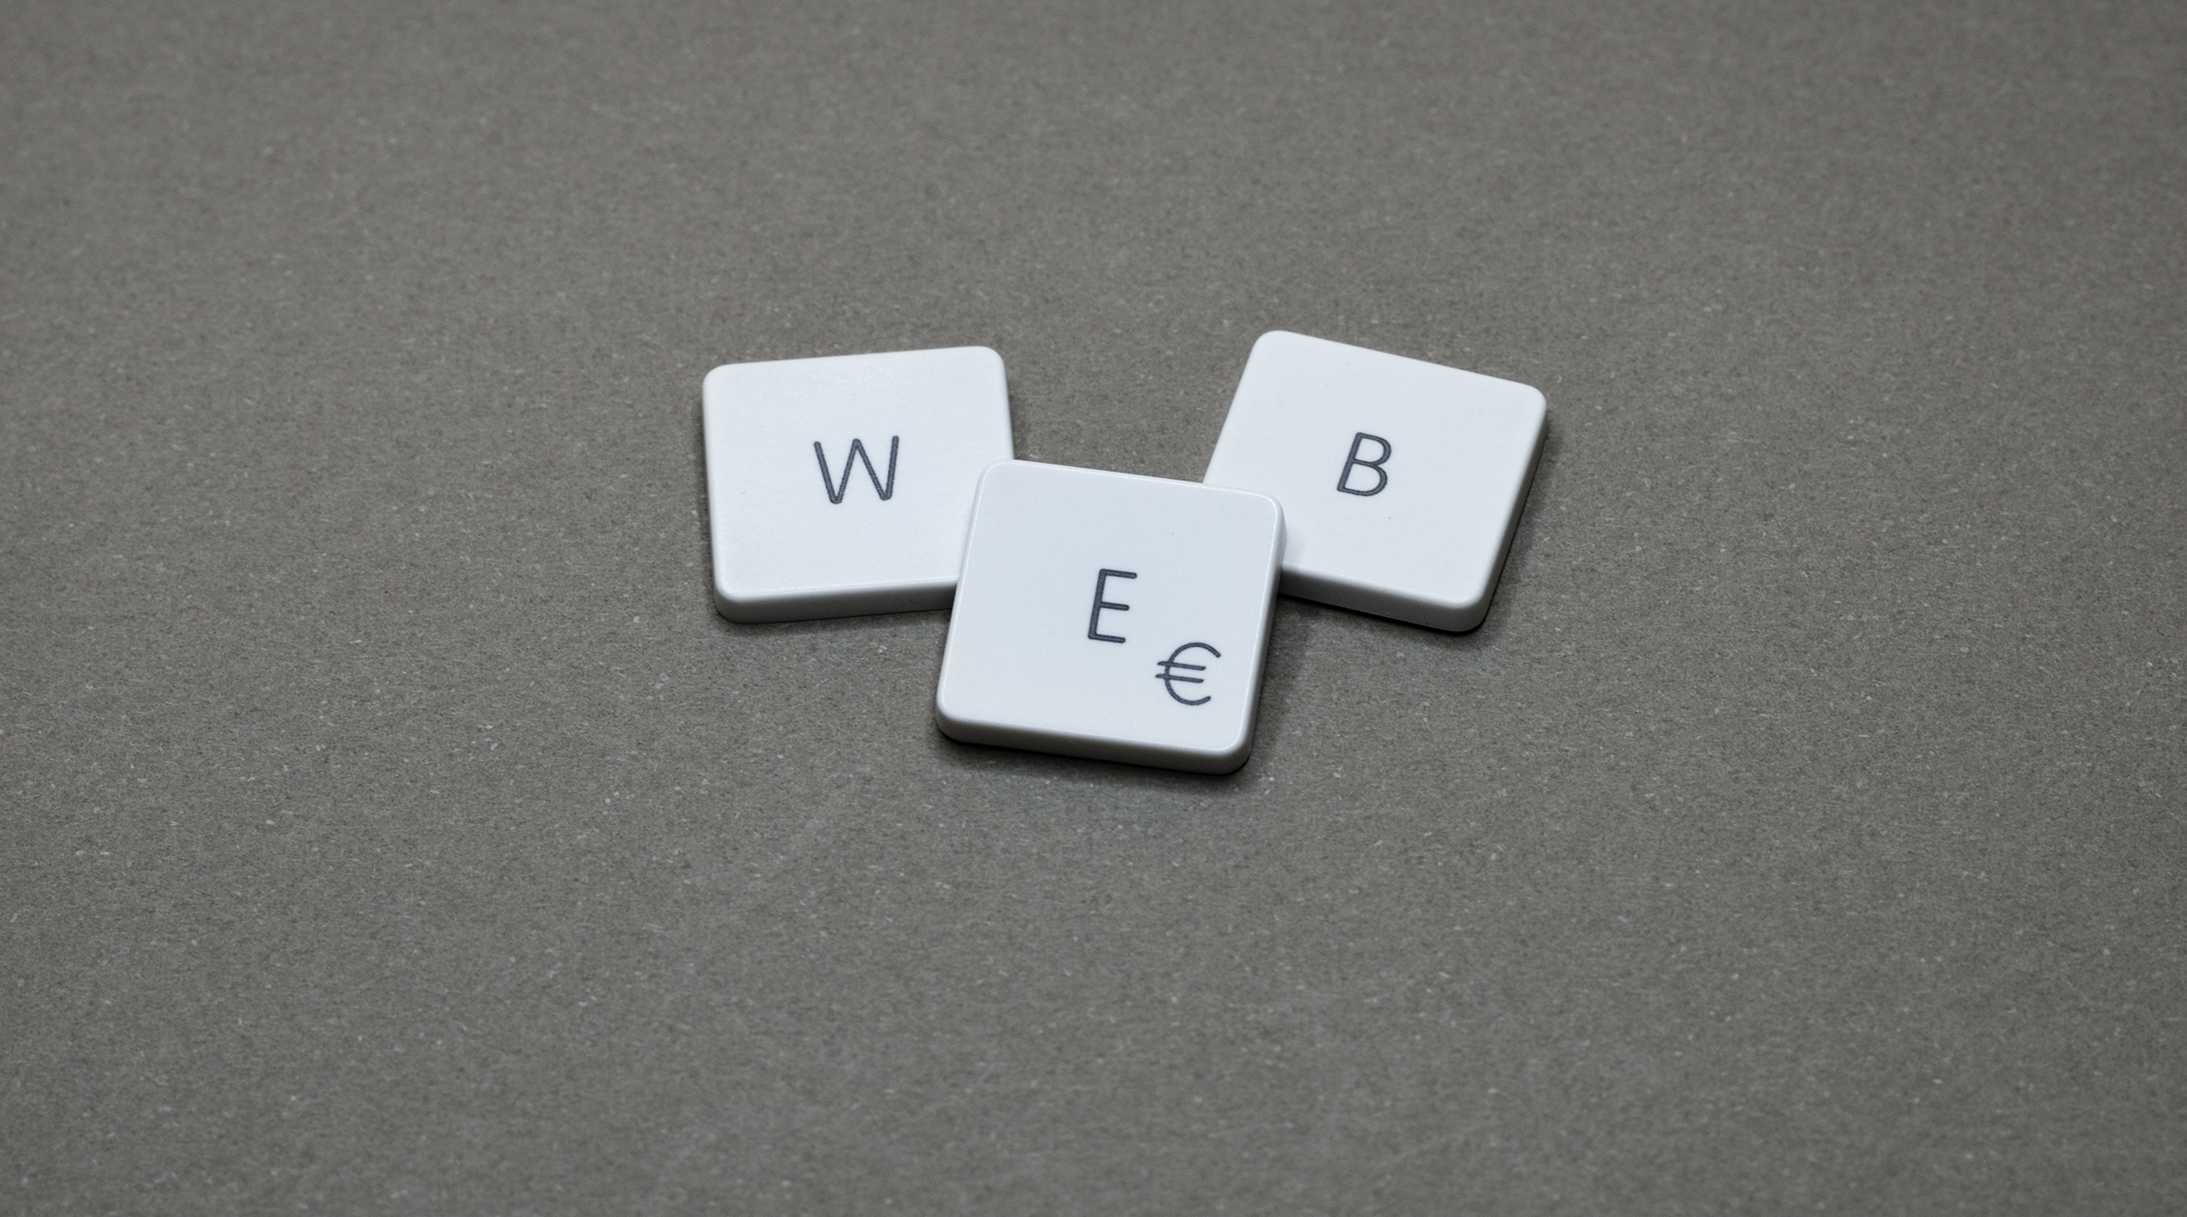 Web 3: A Minimalistic Introduction